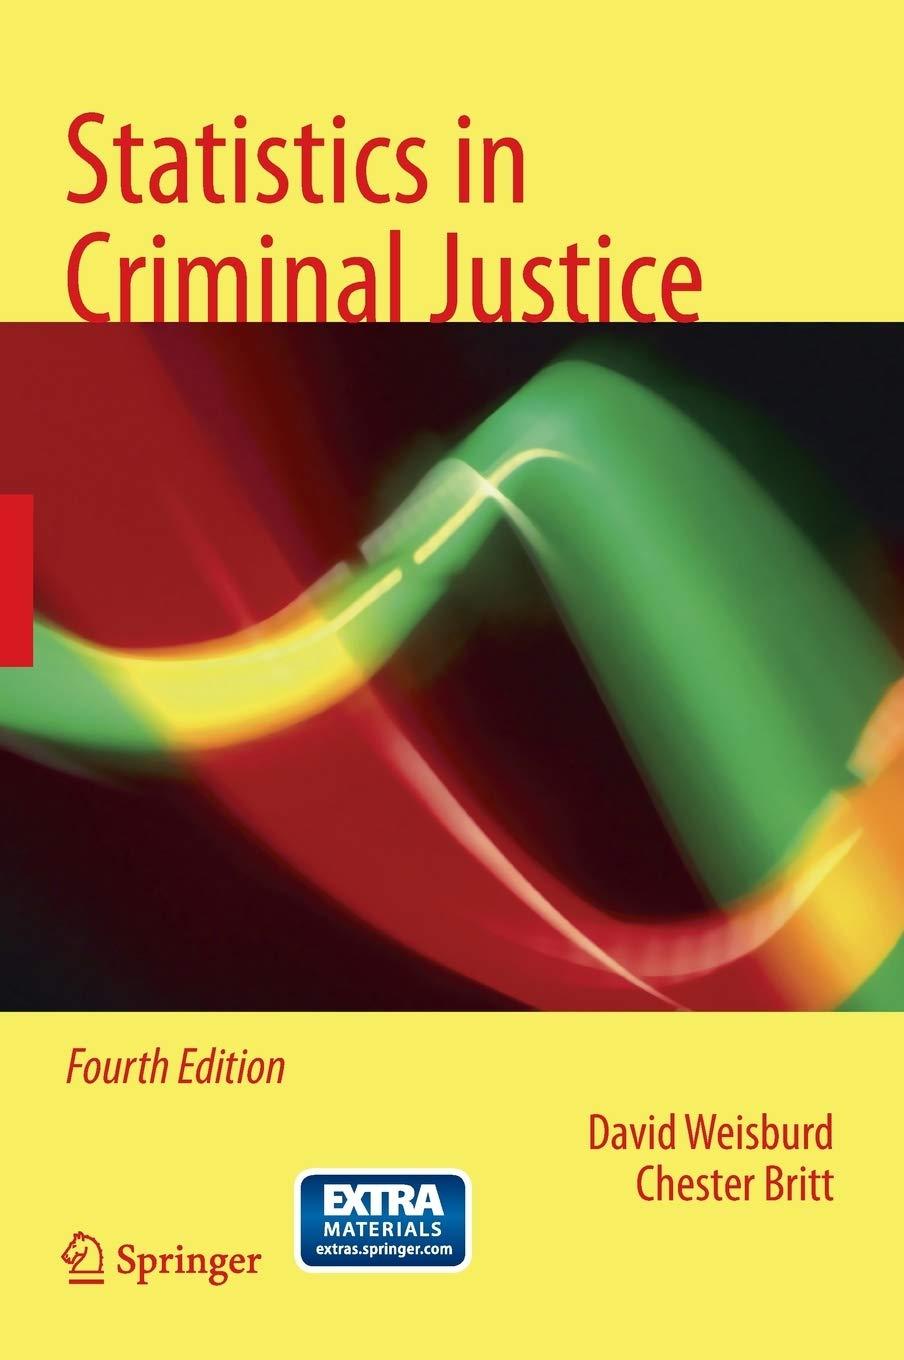 statistics in criminal justice 4th edition david weisburd, chester britt 146149169x, 9781461491699